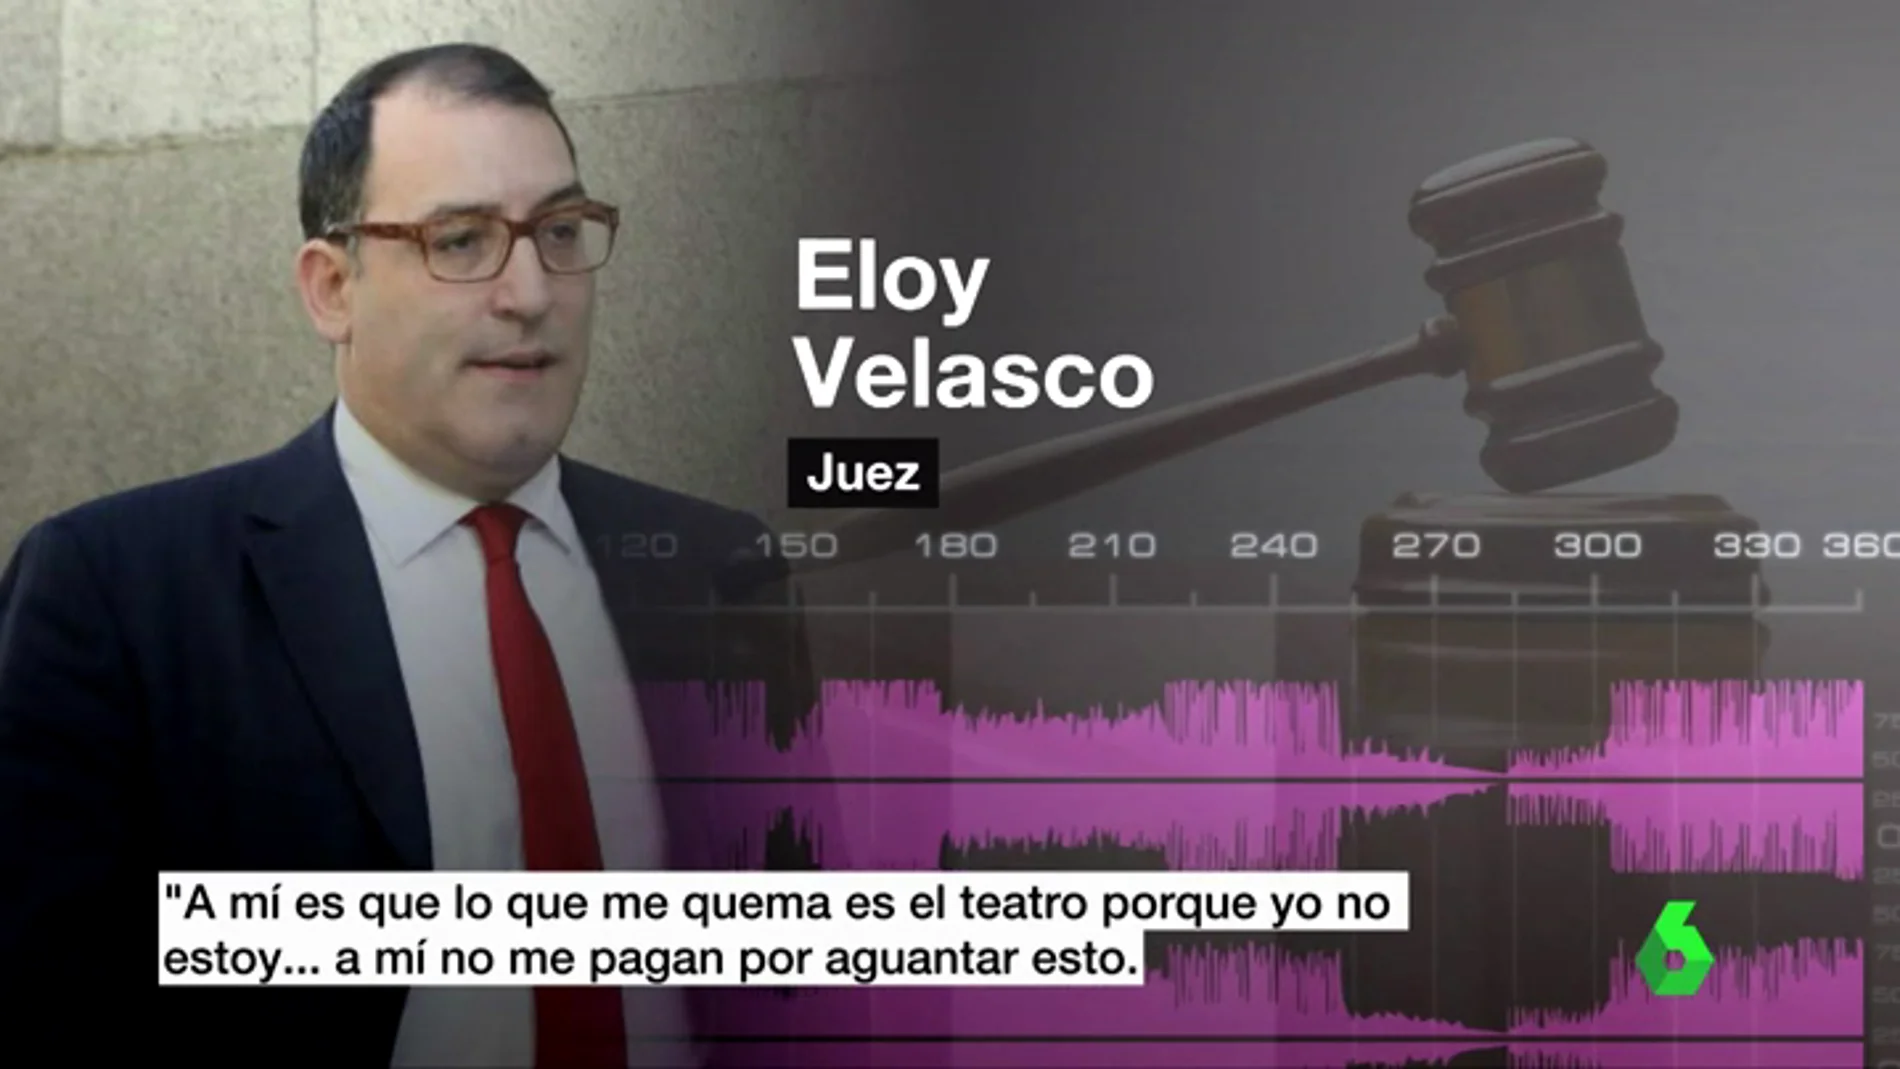 El juez Eloy Velasco